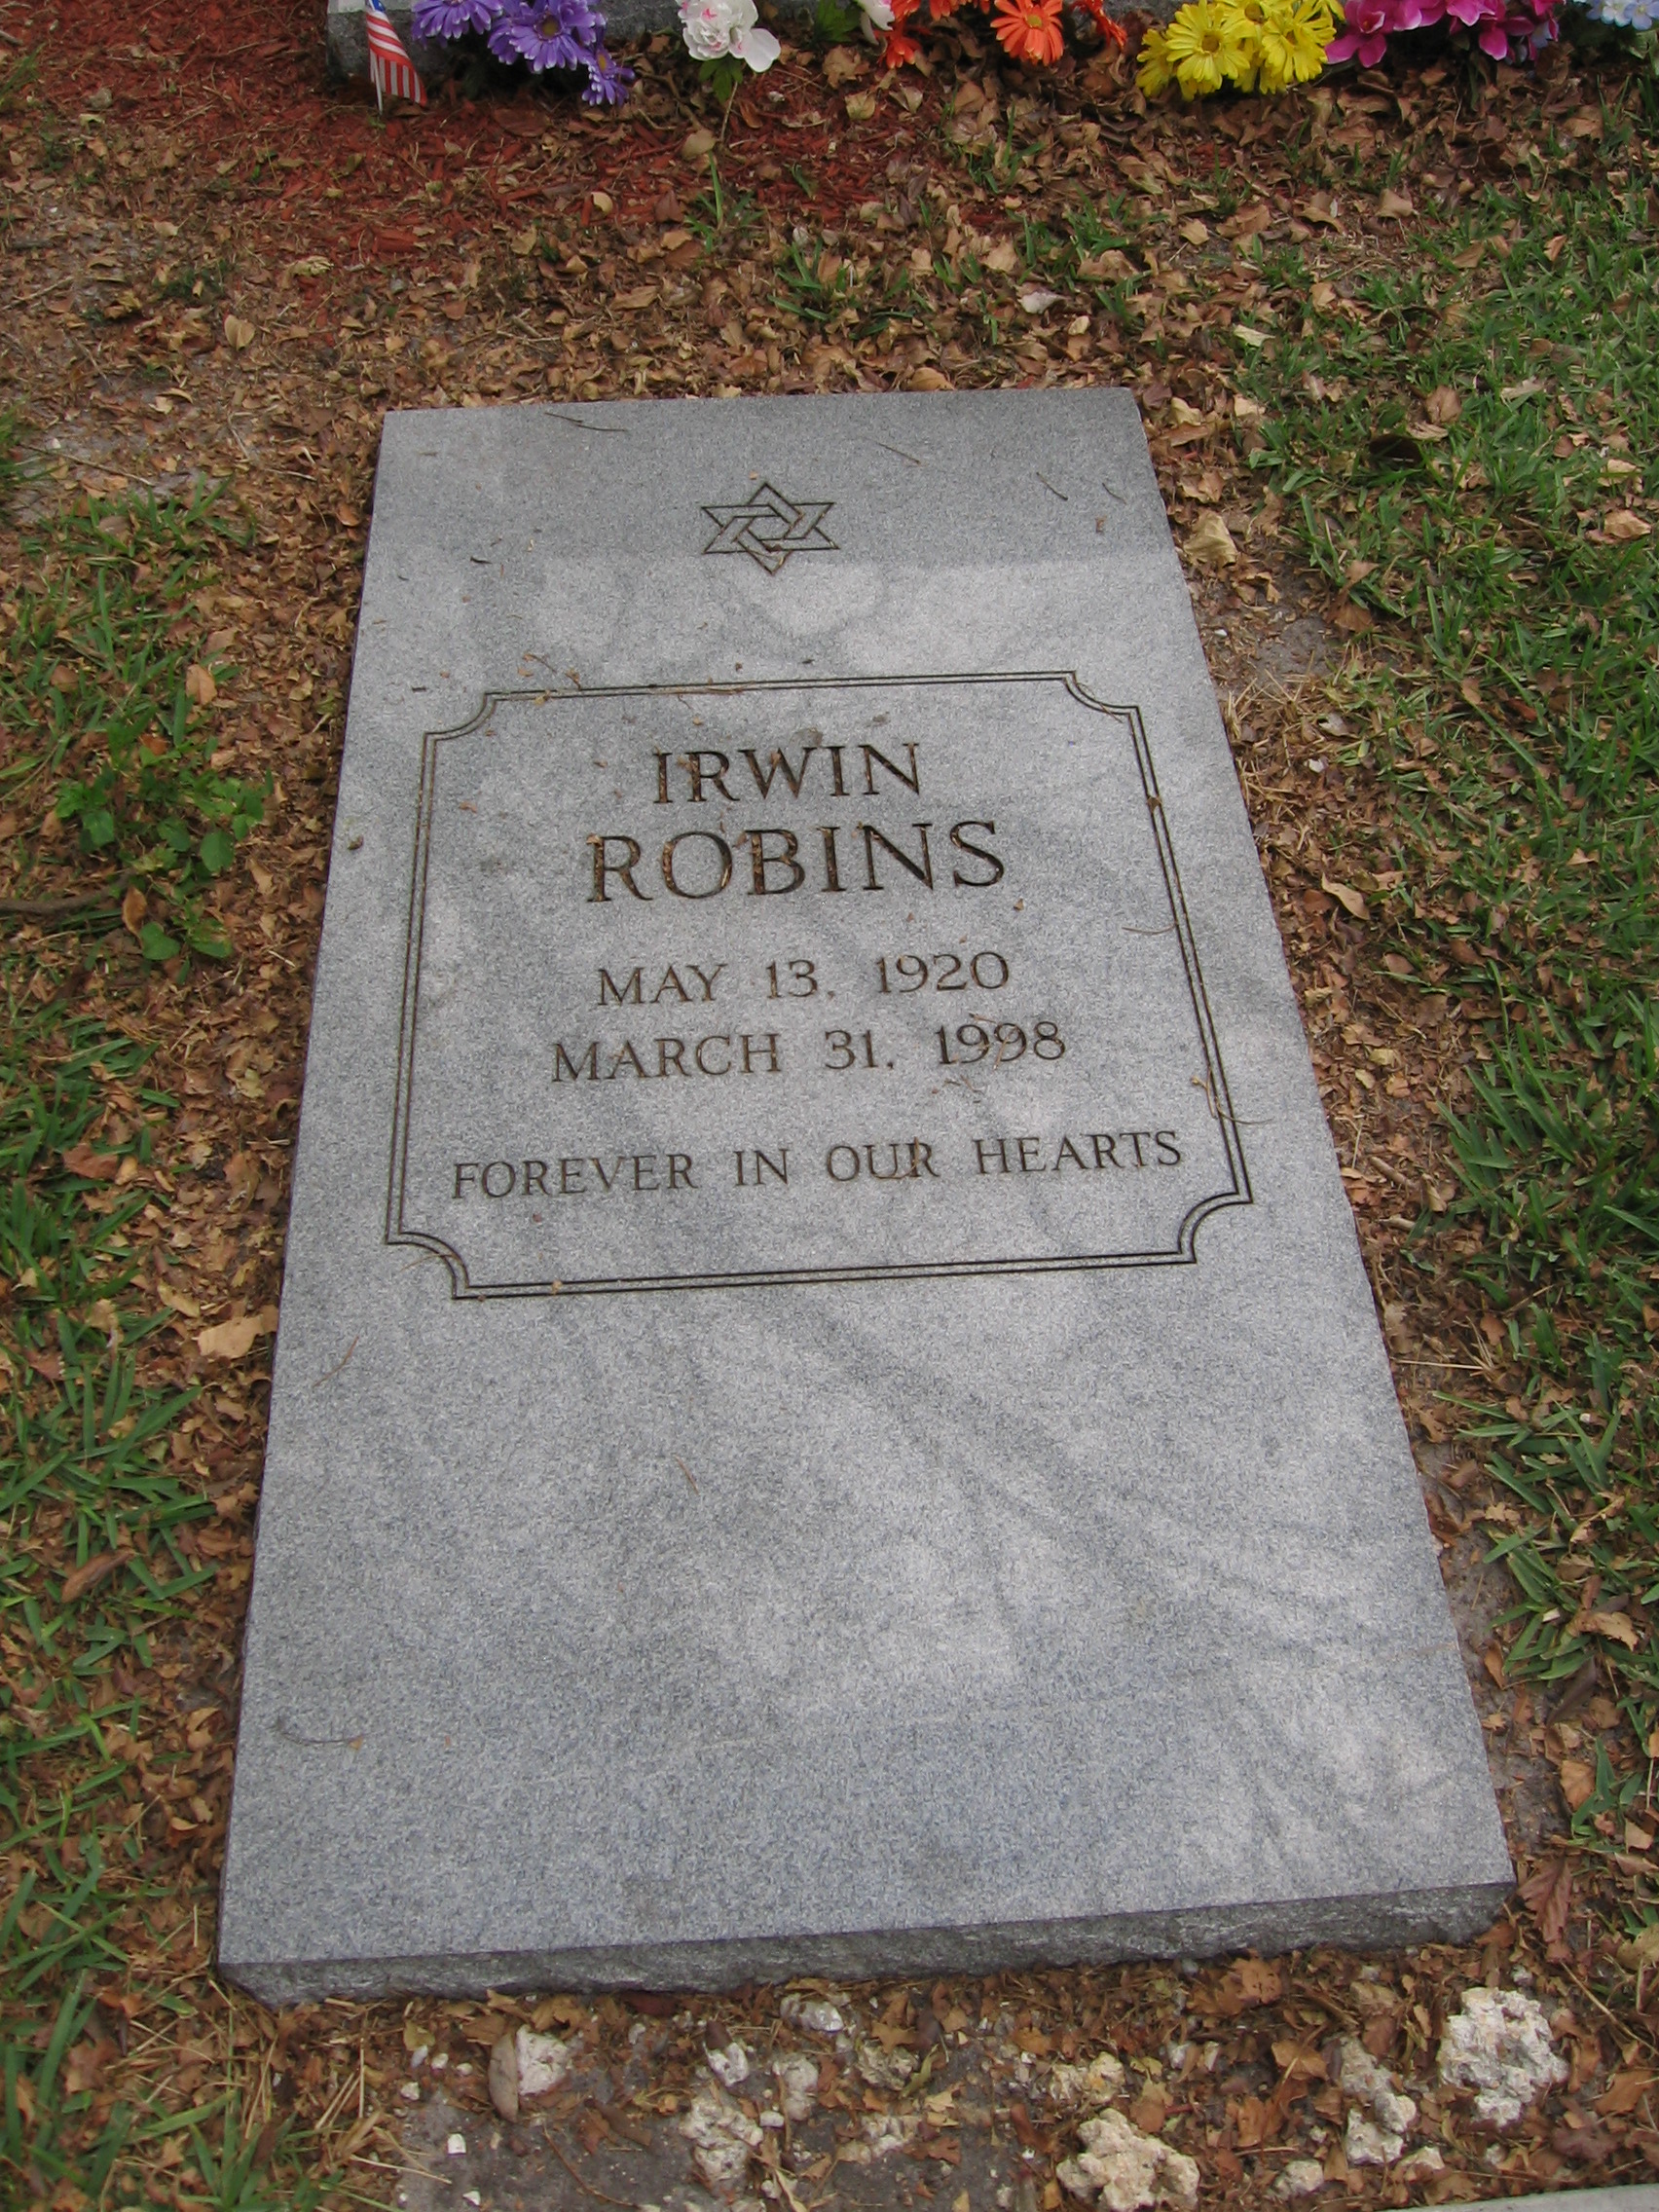 Irwin Robins